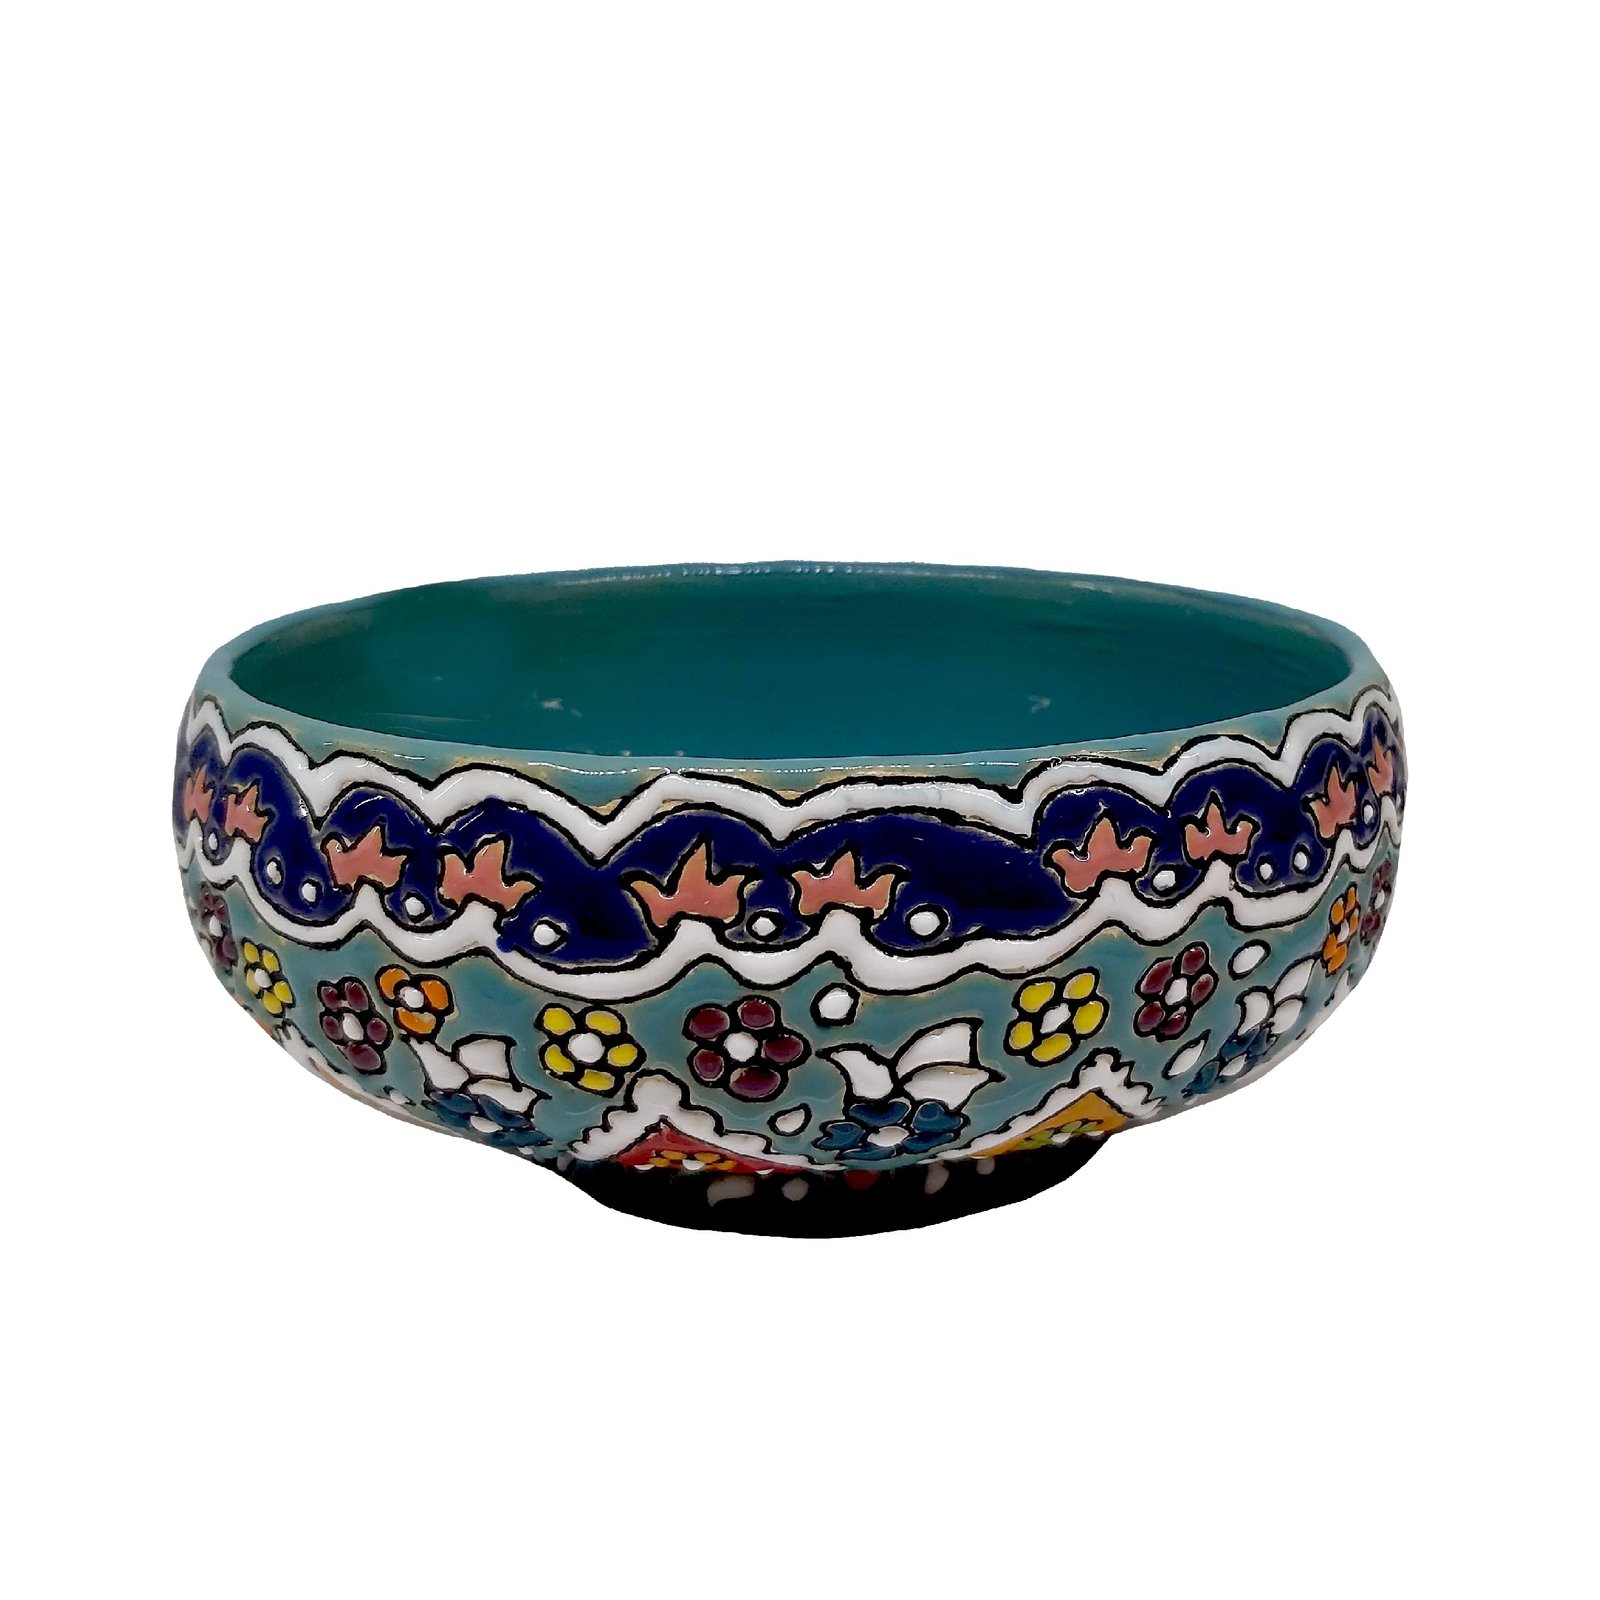 Enamel Handicraft pottery bowl Model rbc Code 69, artisanat plat, pots artisanaux, assiettes artisanales